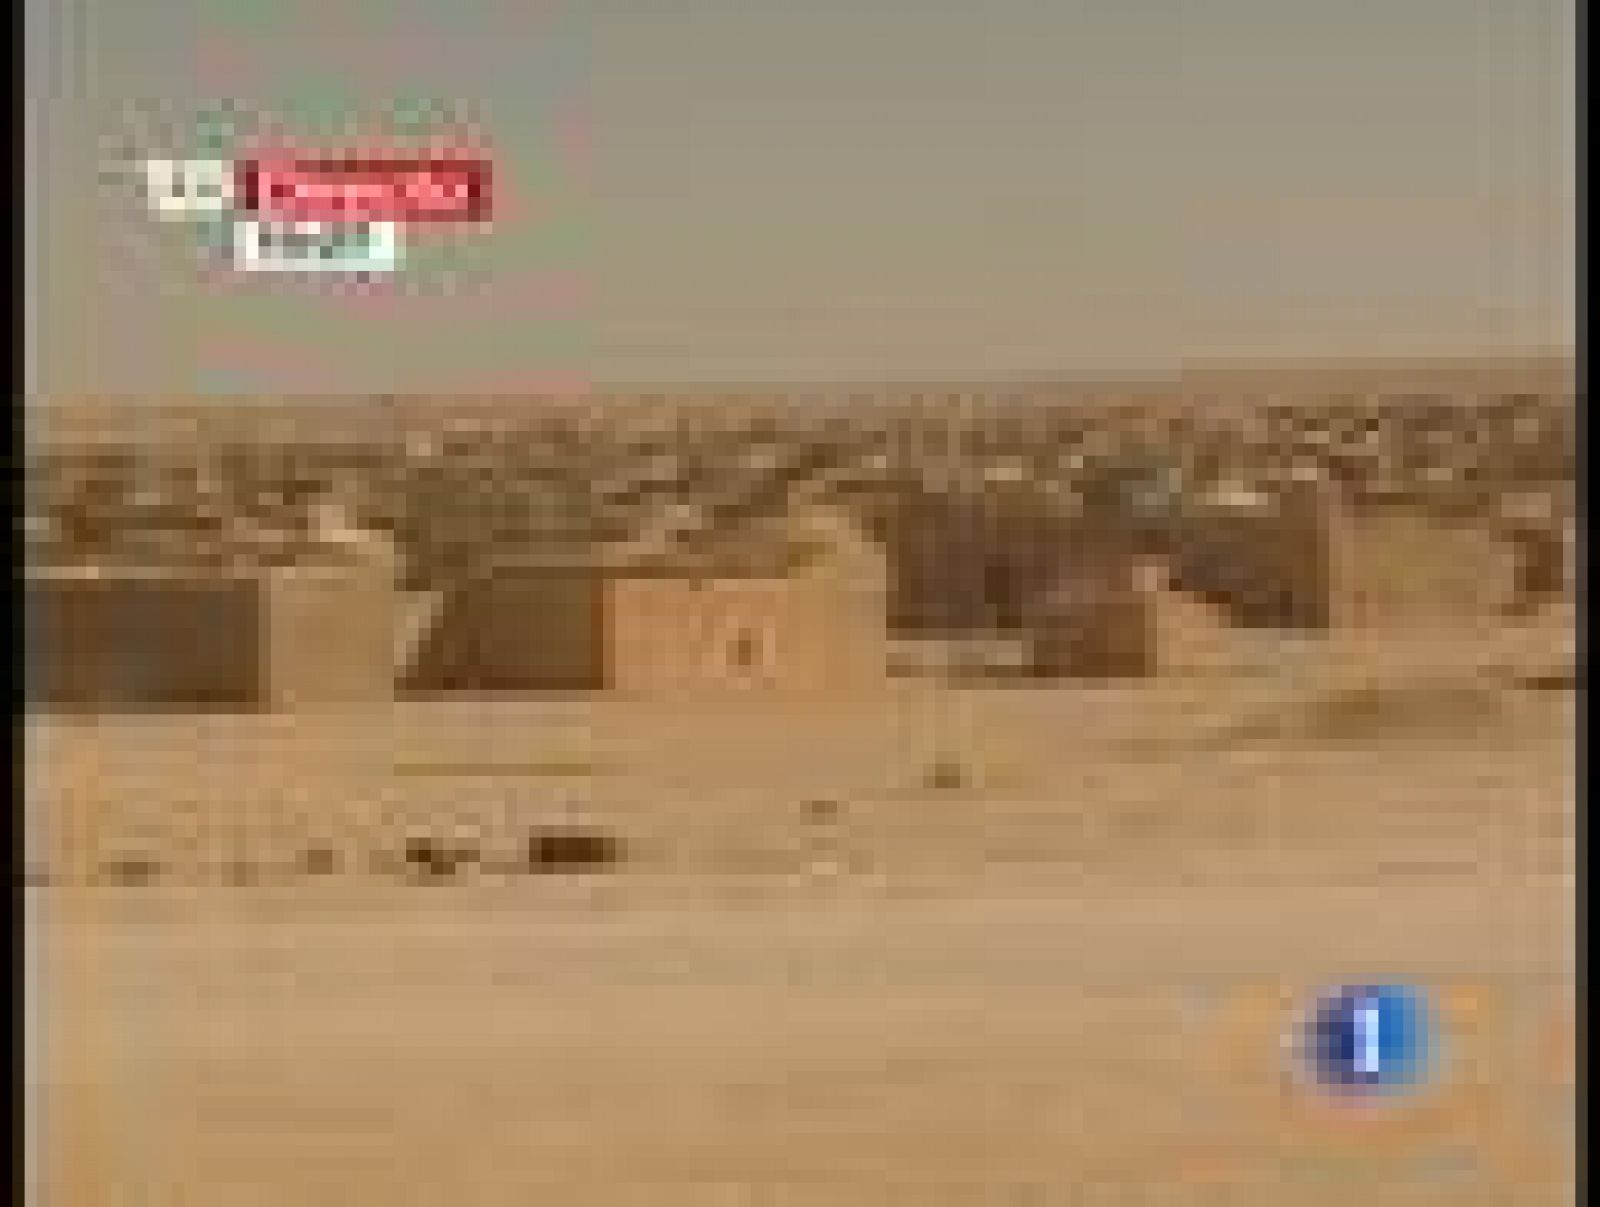 Sin programa: Campamentos de refugiados saharauis | RTVE Play